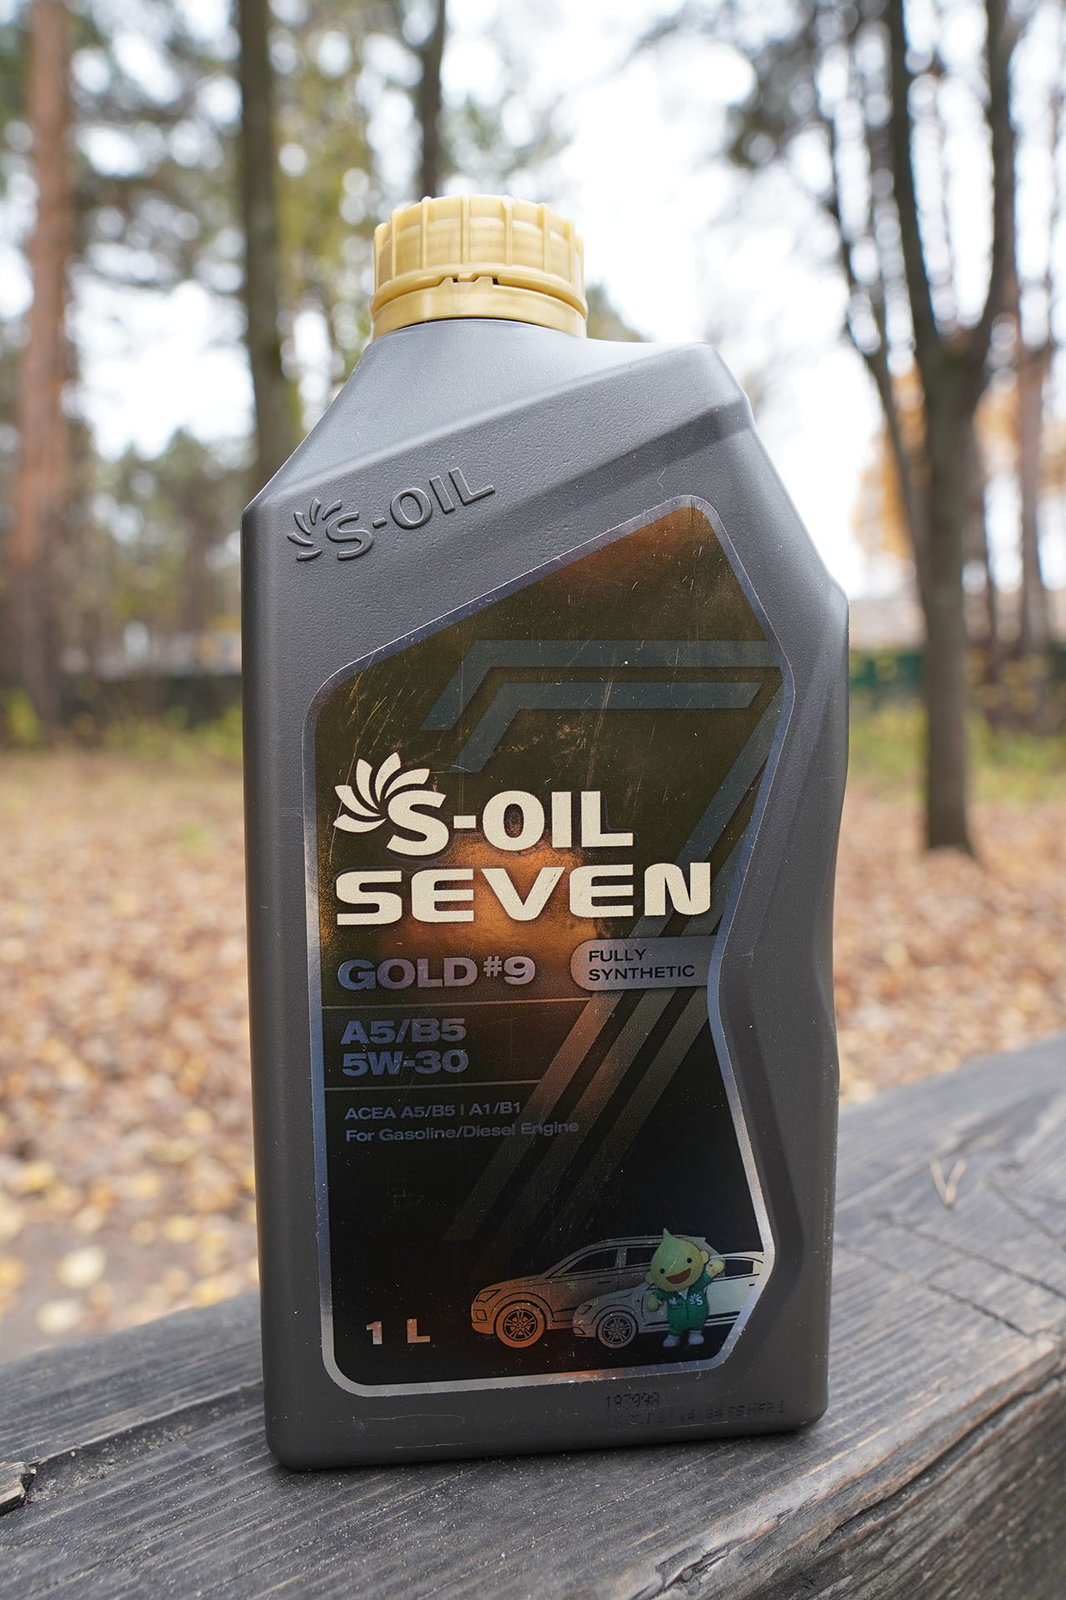 S-Oil 7 Gold #9 A5/B5 5W-30 свежее - Лабораторные анализы - Свежие .